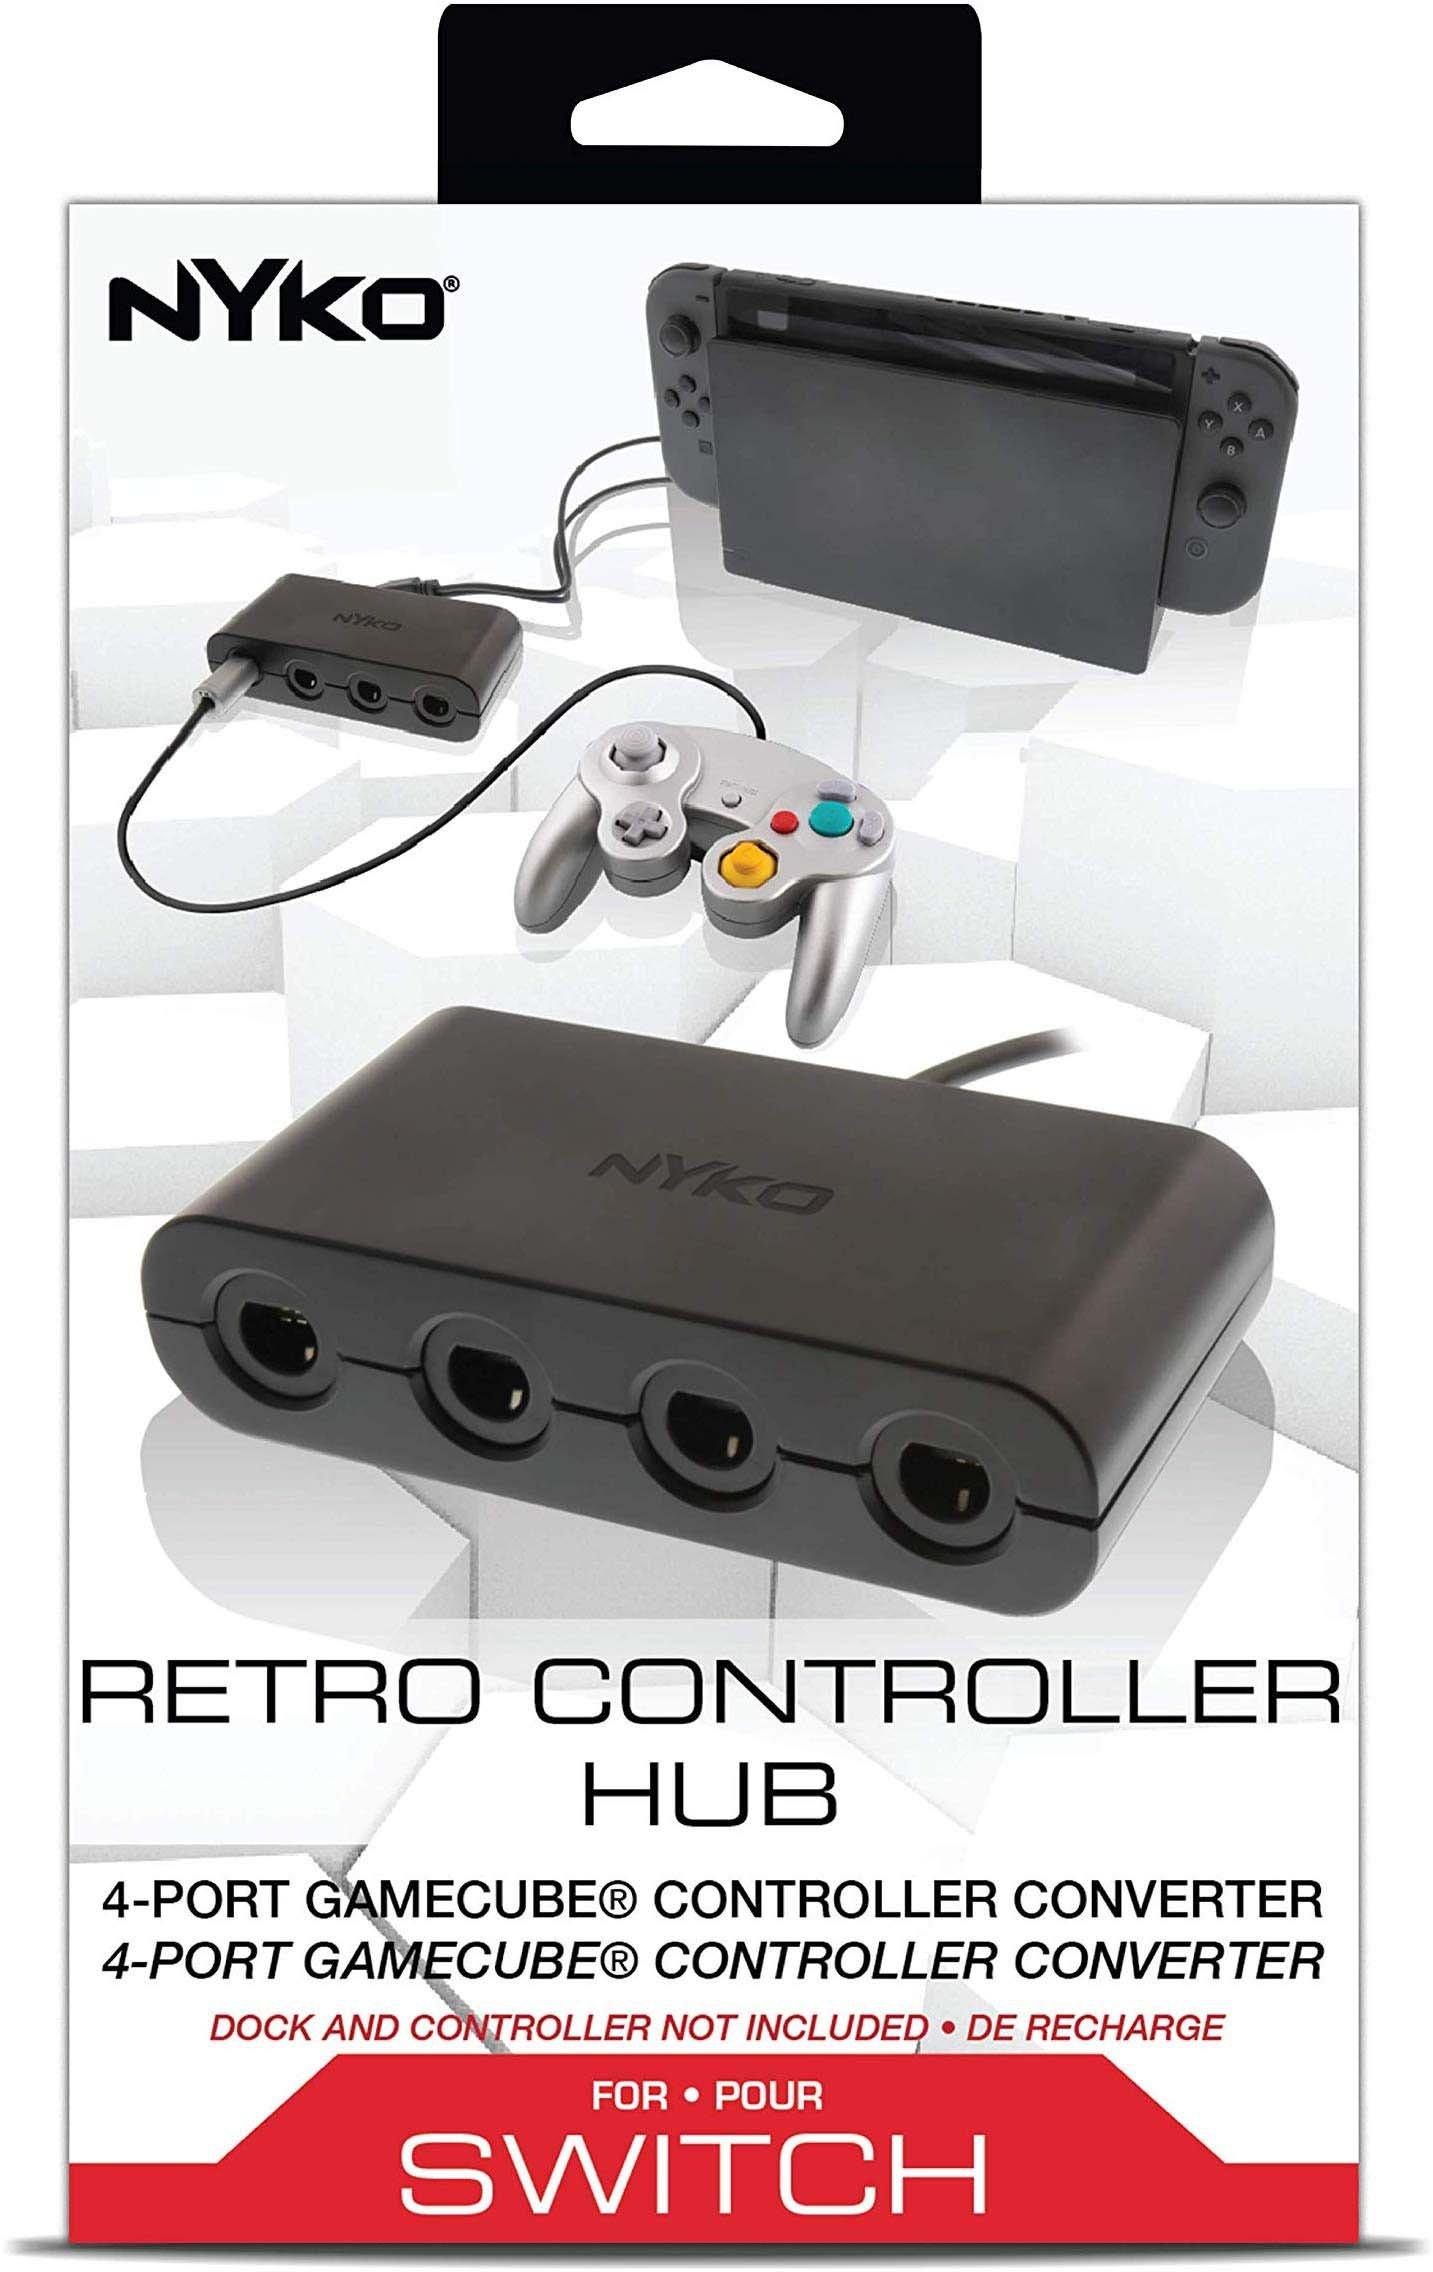 4 gamecube controllers